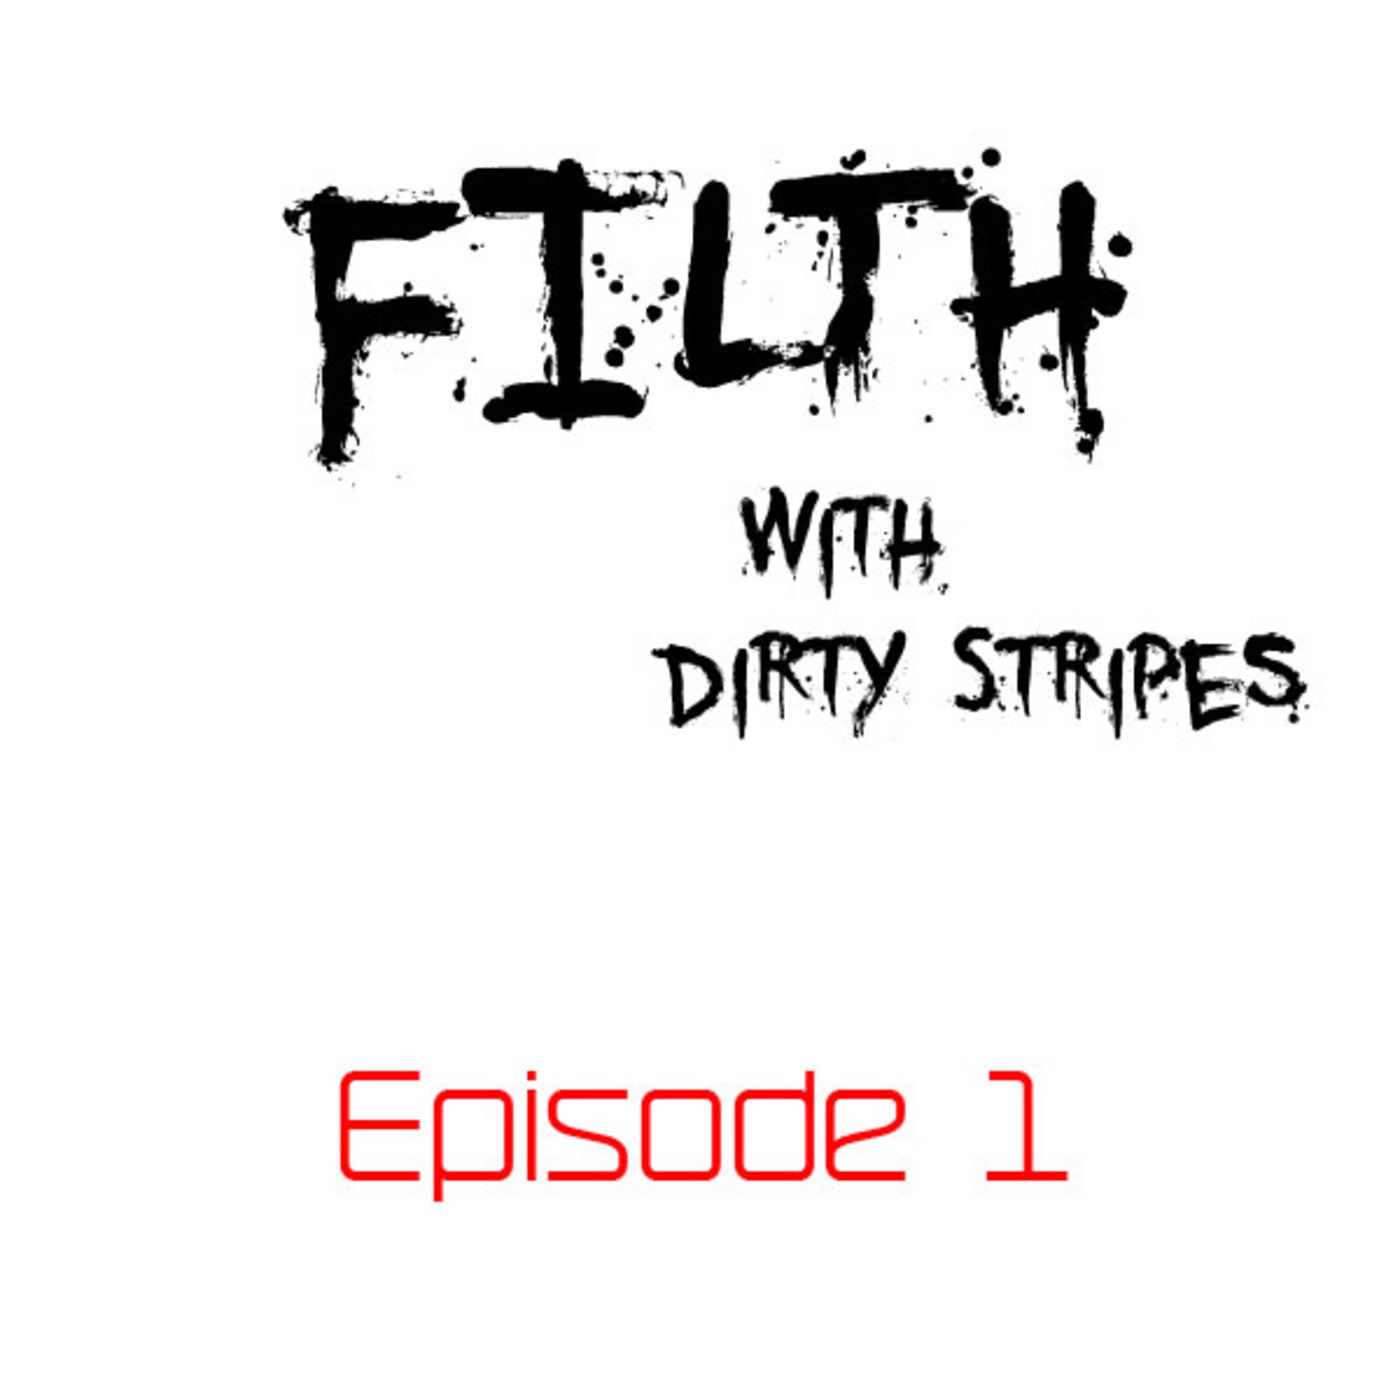 Filth - Episode 1